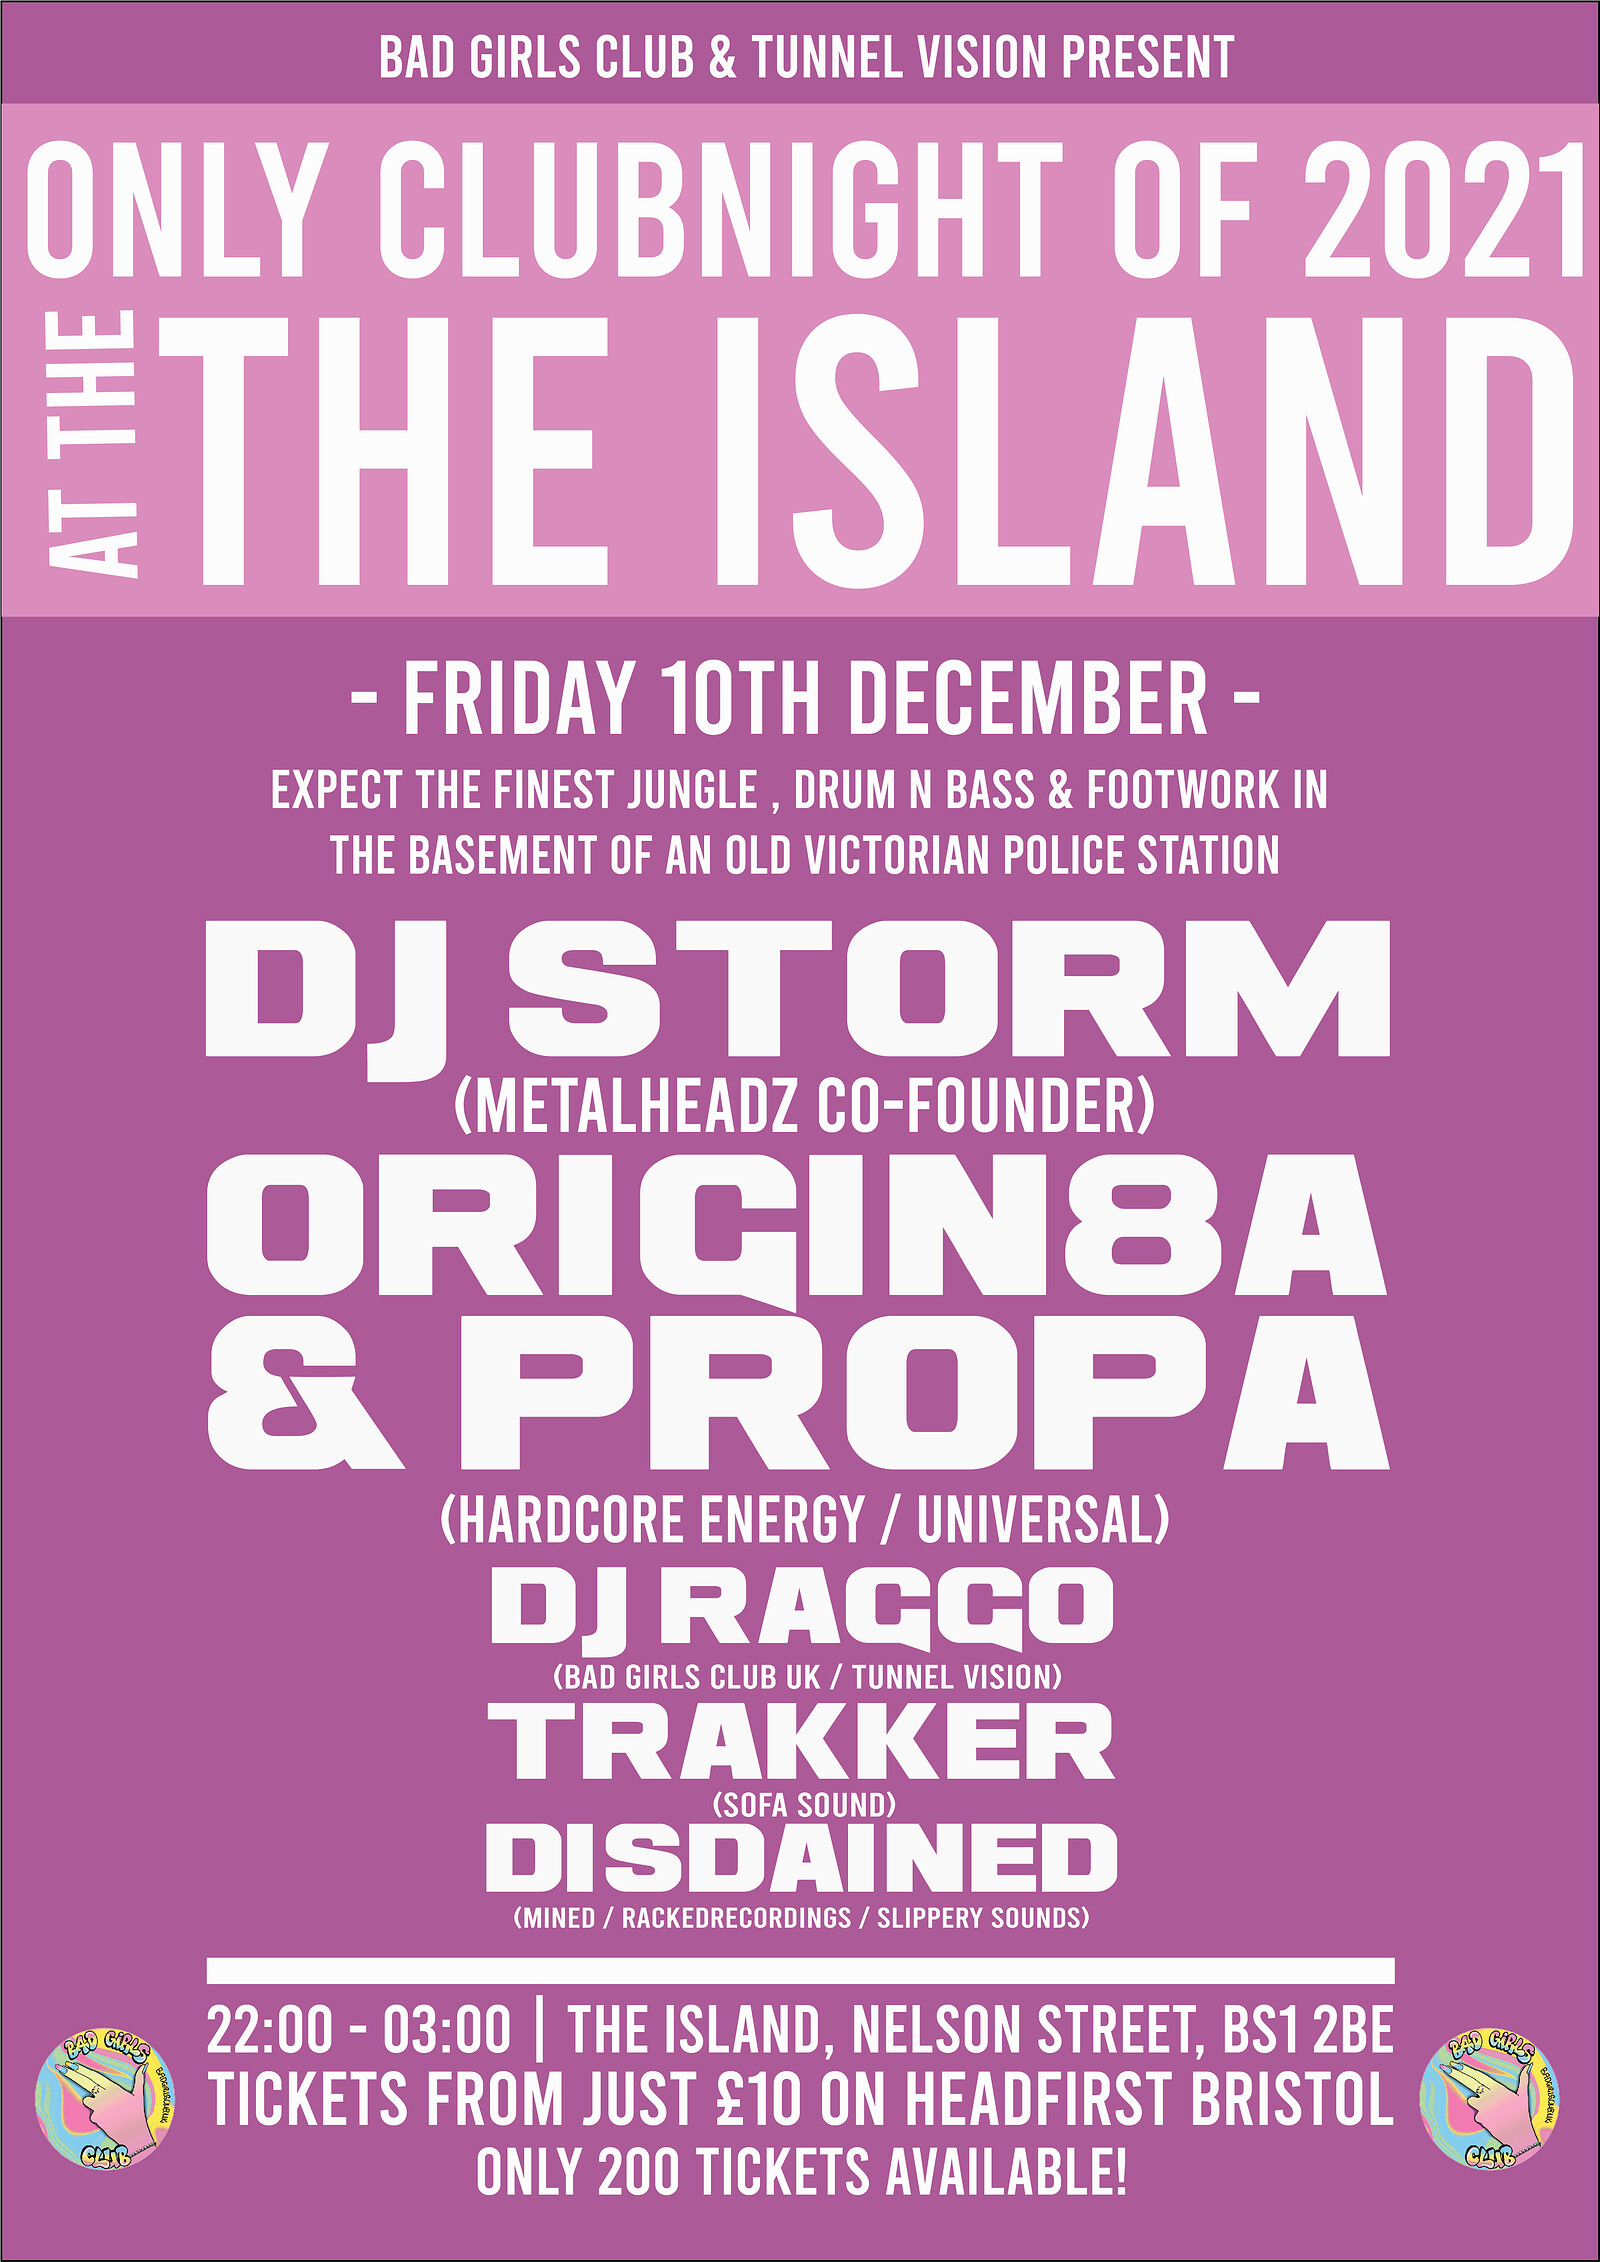 Bad Girls Club: DJ Storm + Origin8a & Propa at The Island